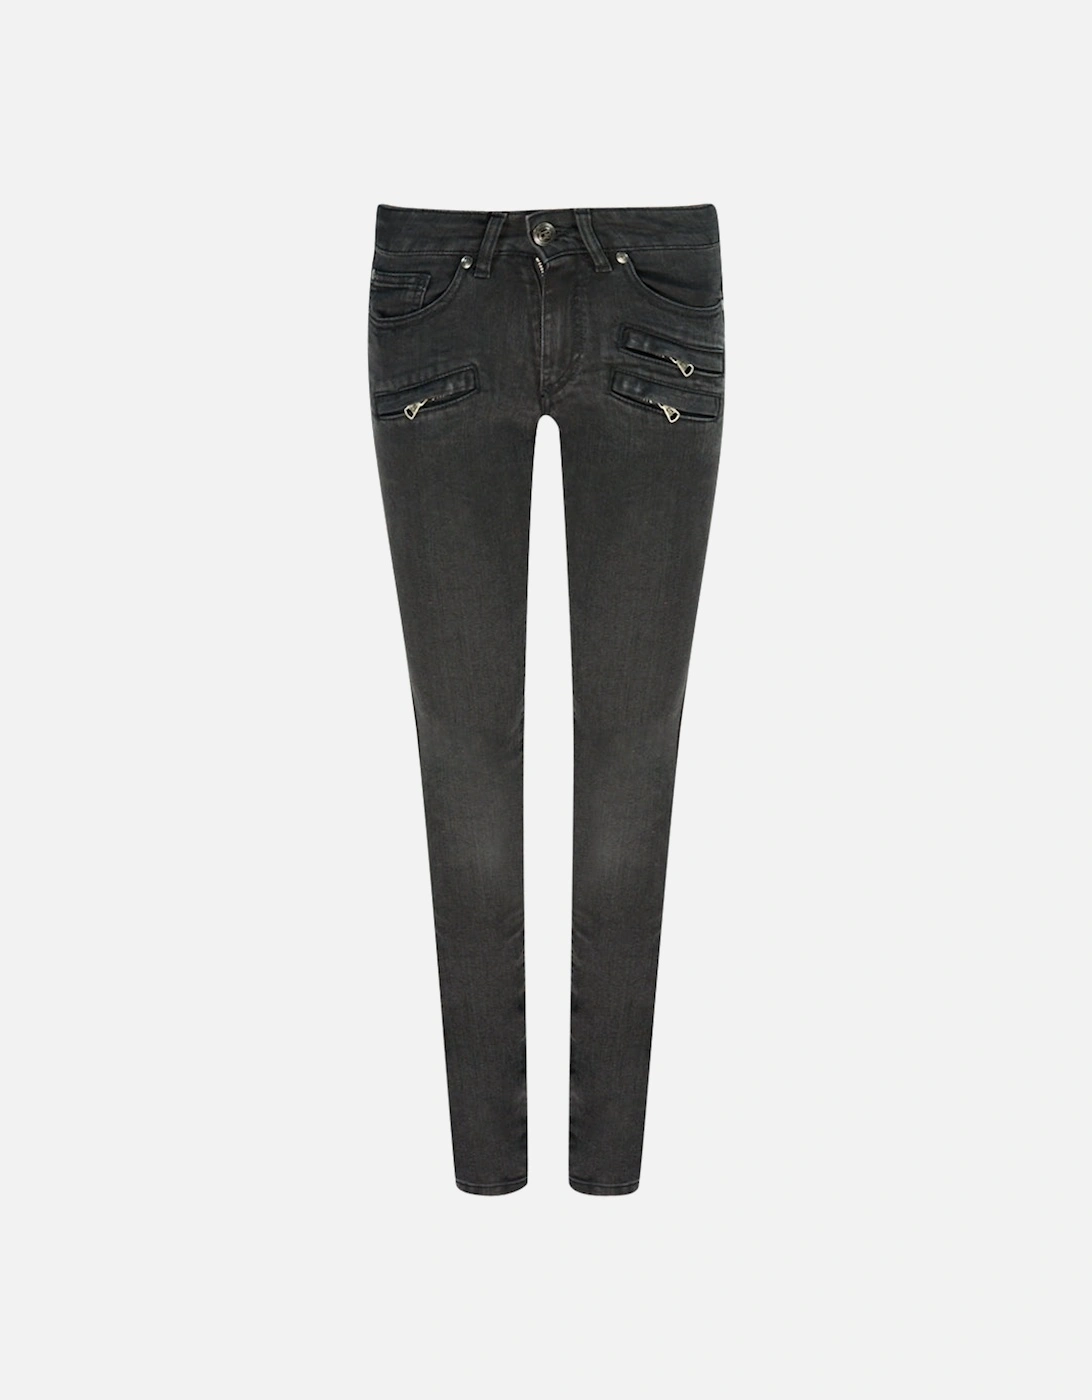 FP5359J935B Black Jeans, 3 of 2